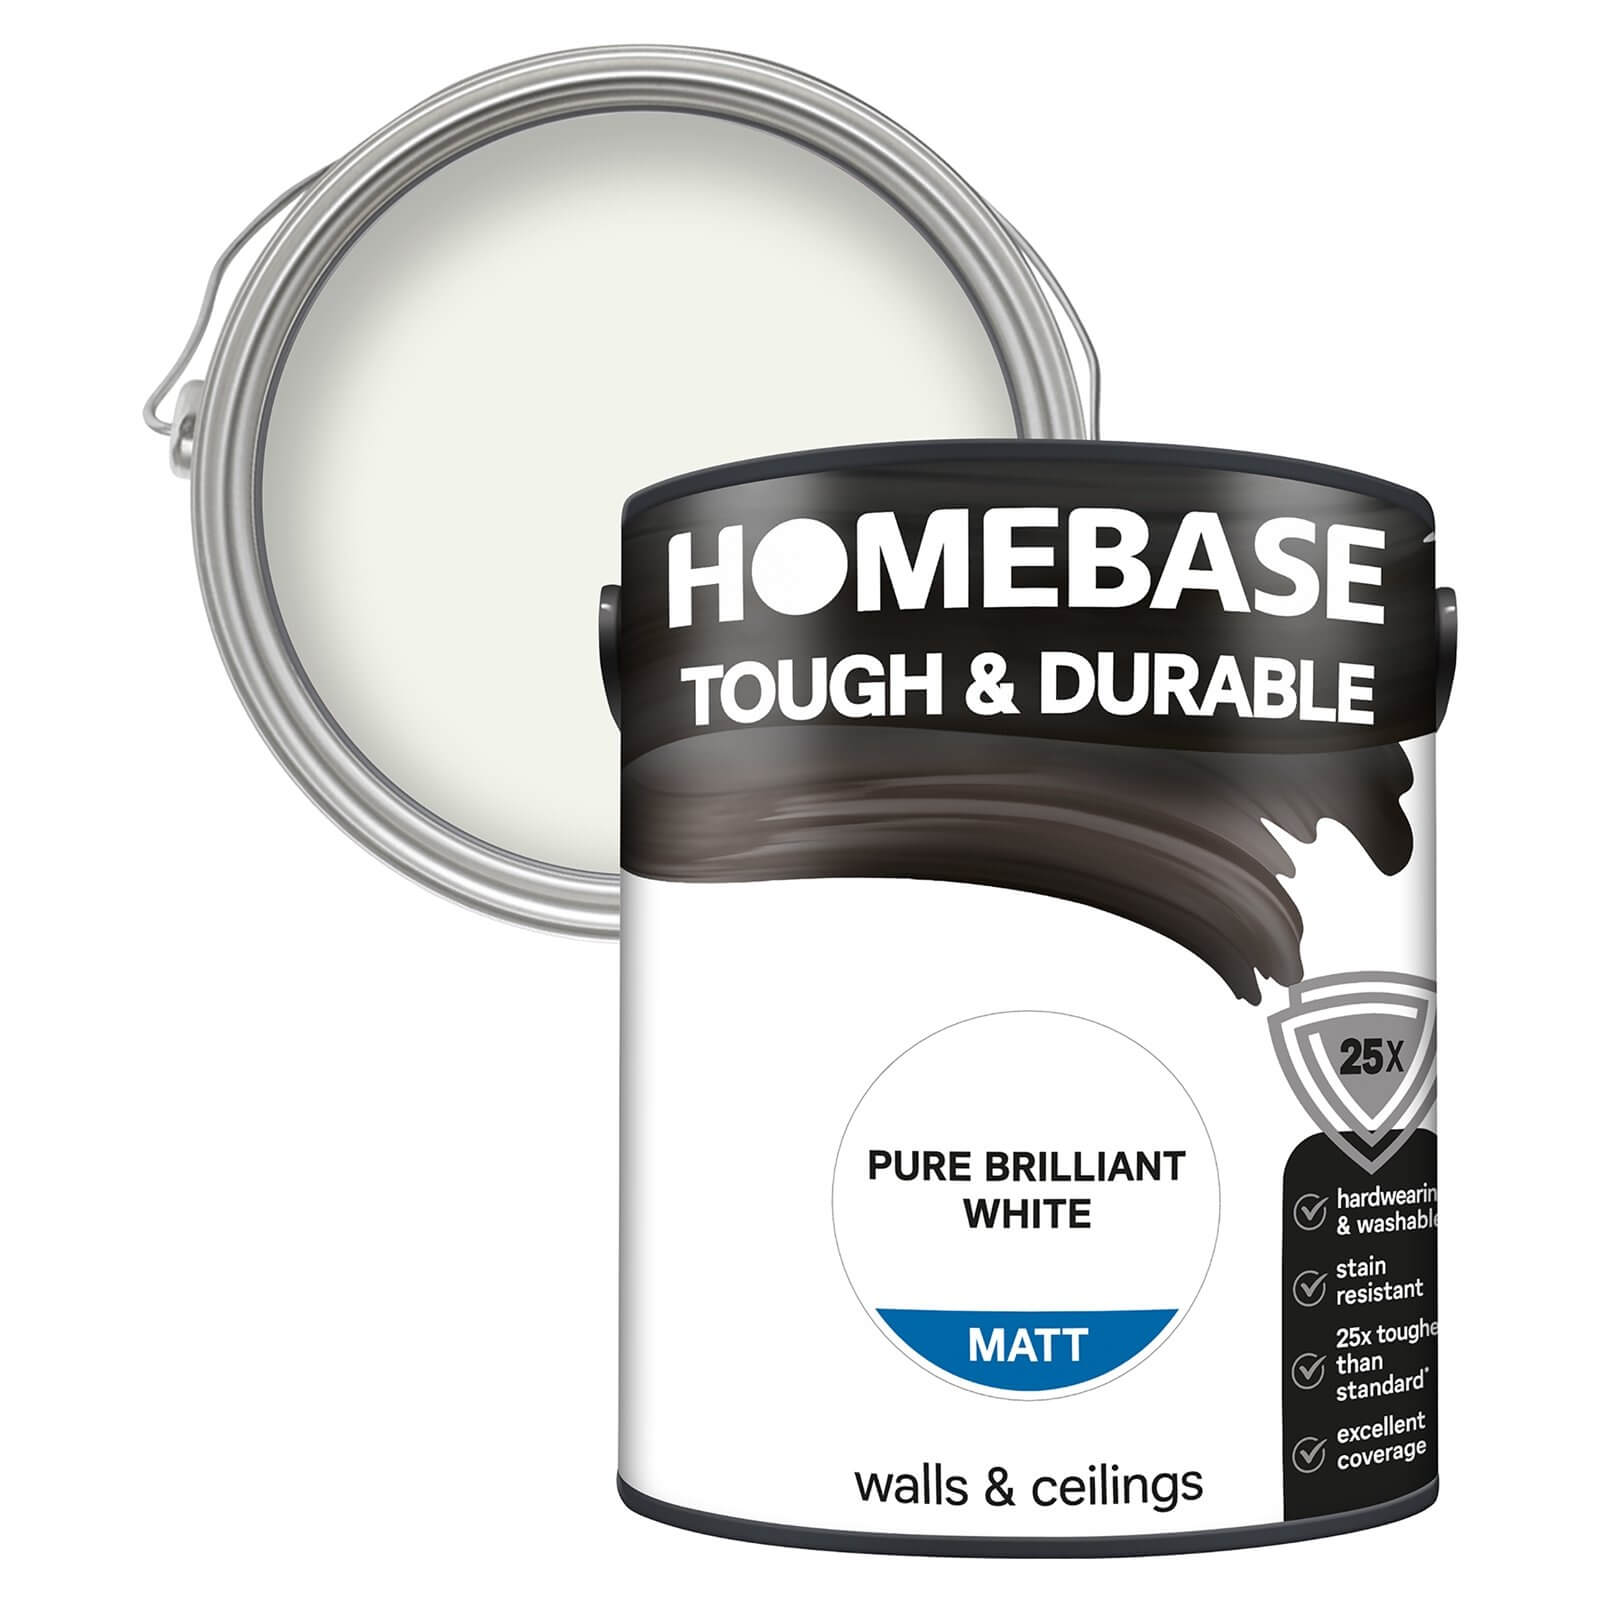 Homebase Tough & Durable Matt Paint Pure Brilliant White - 5L